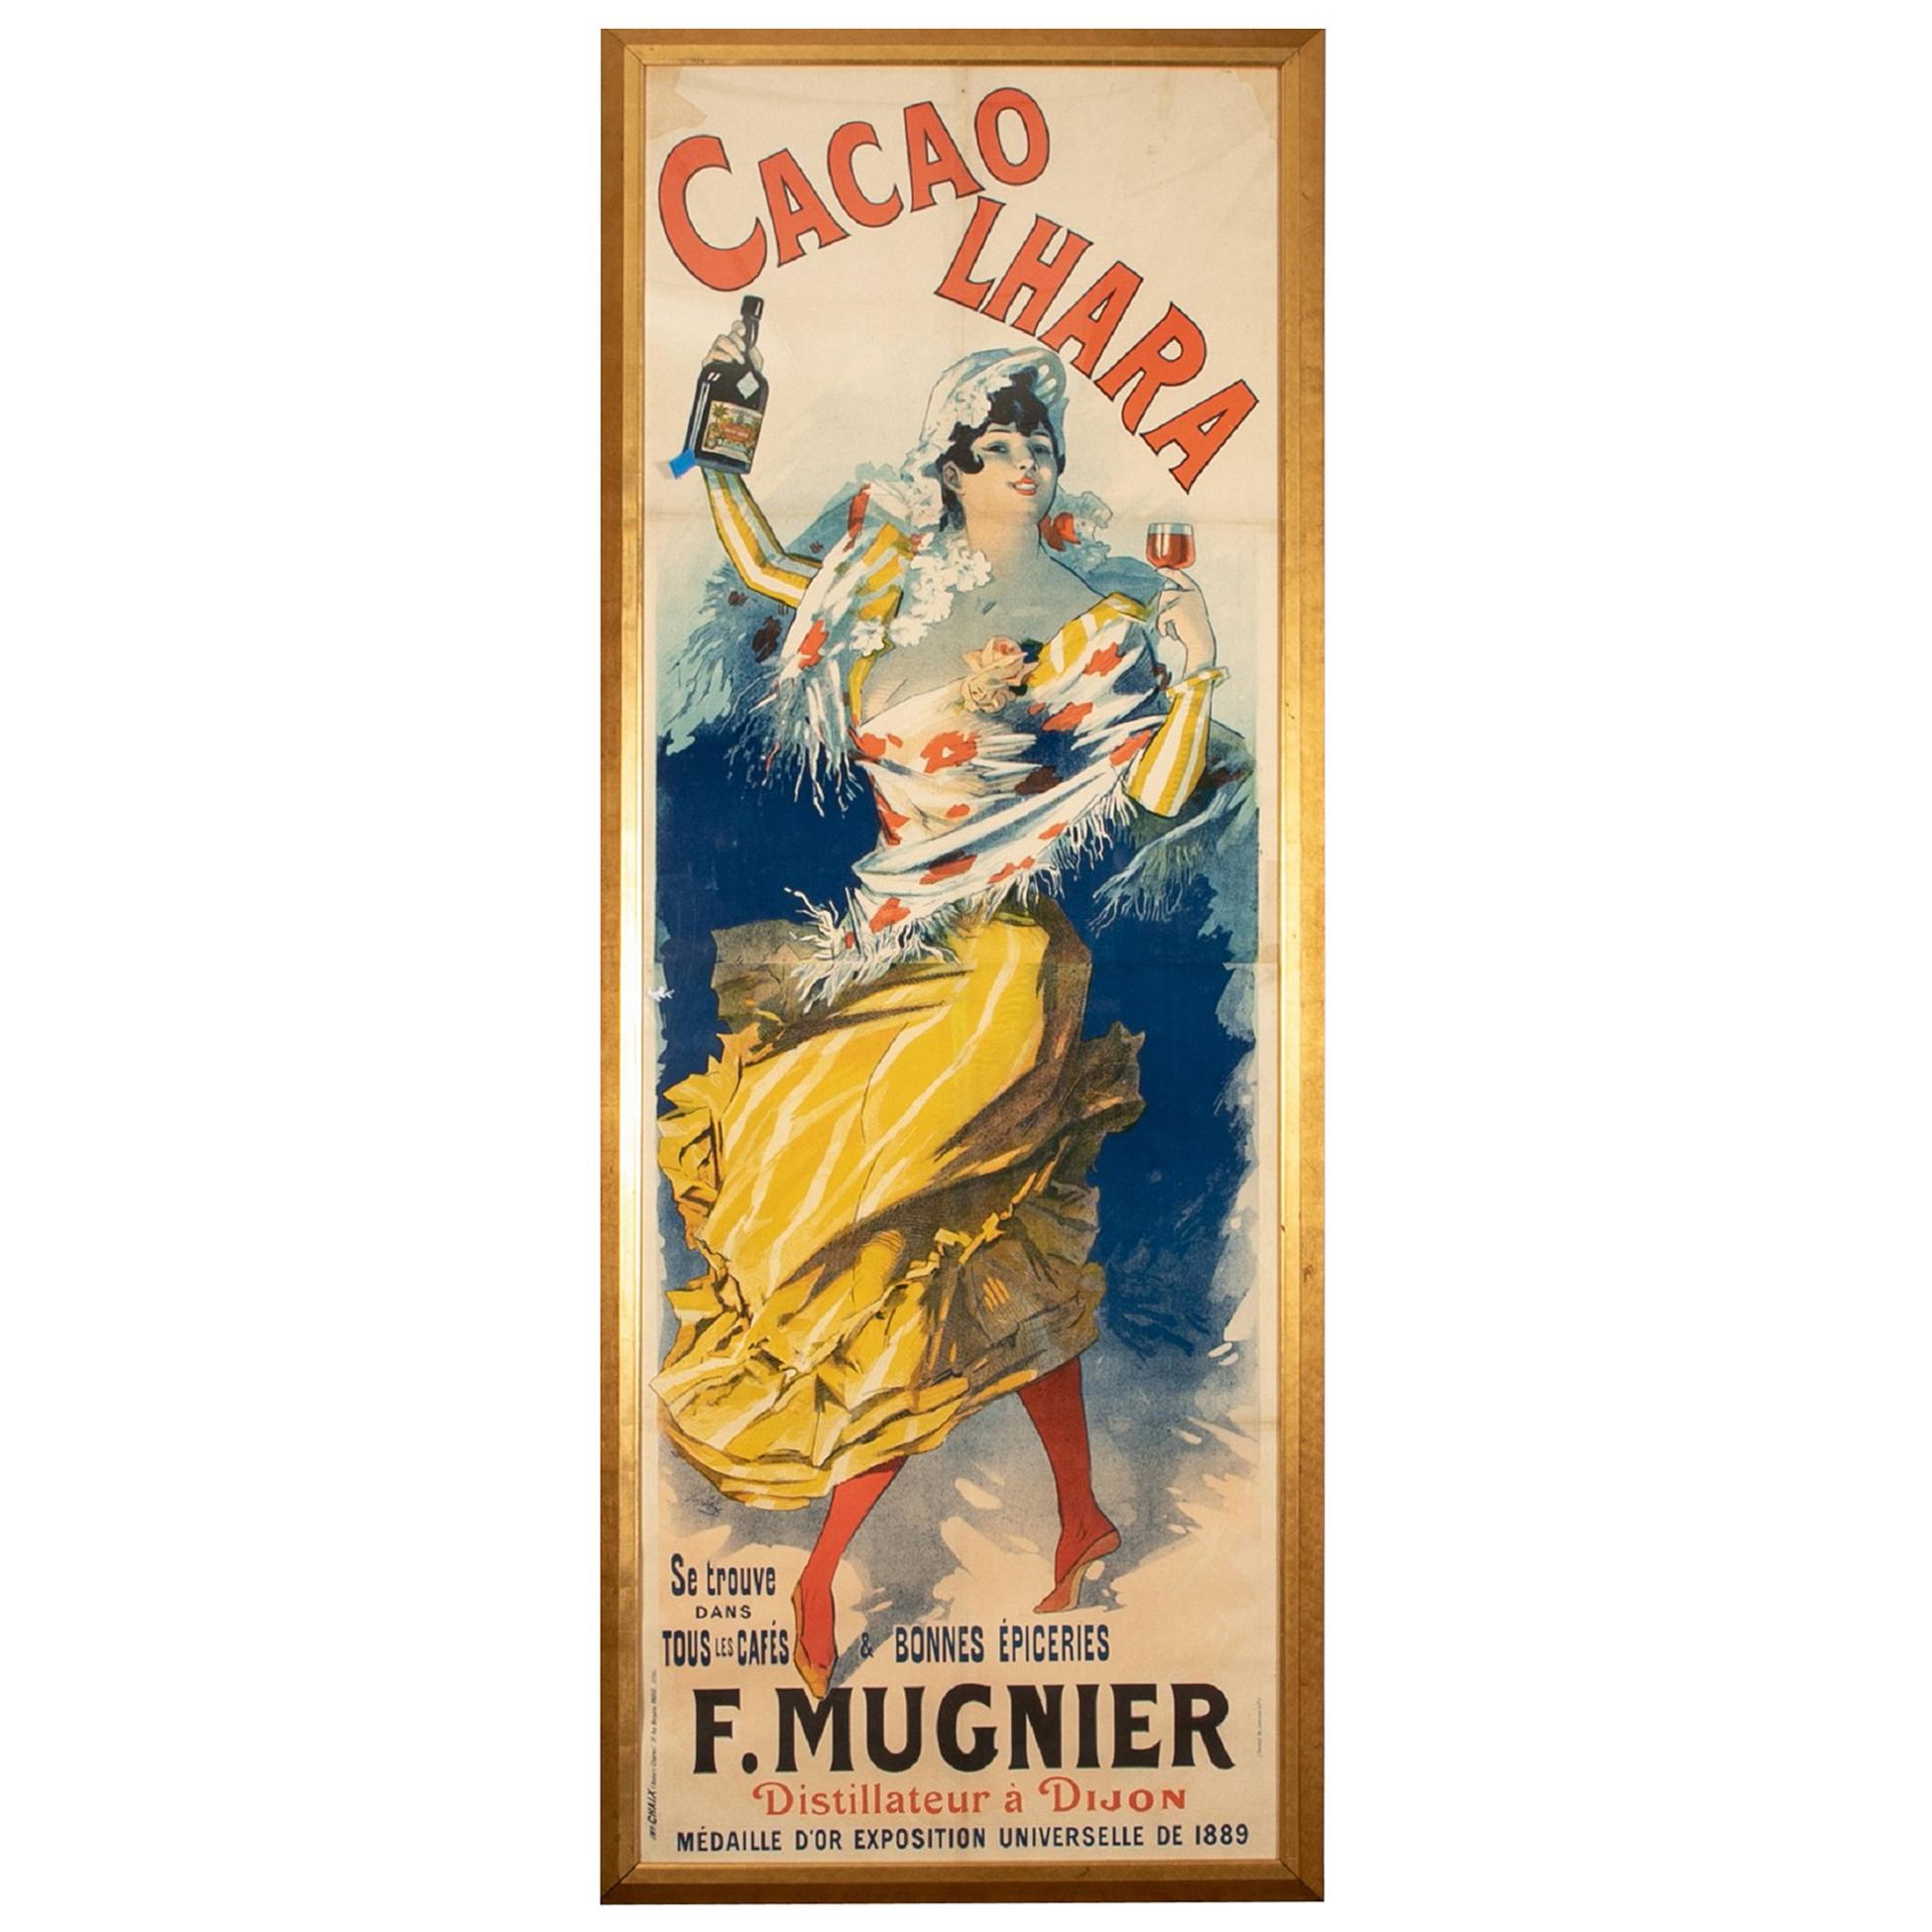 Jules Cheret Colored Lithograph, "Cacao Lhara", circa 1889